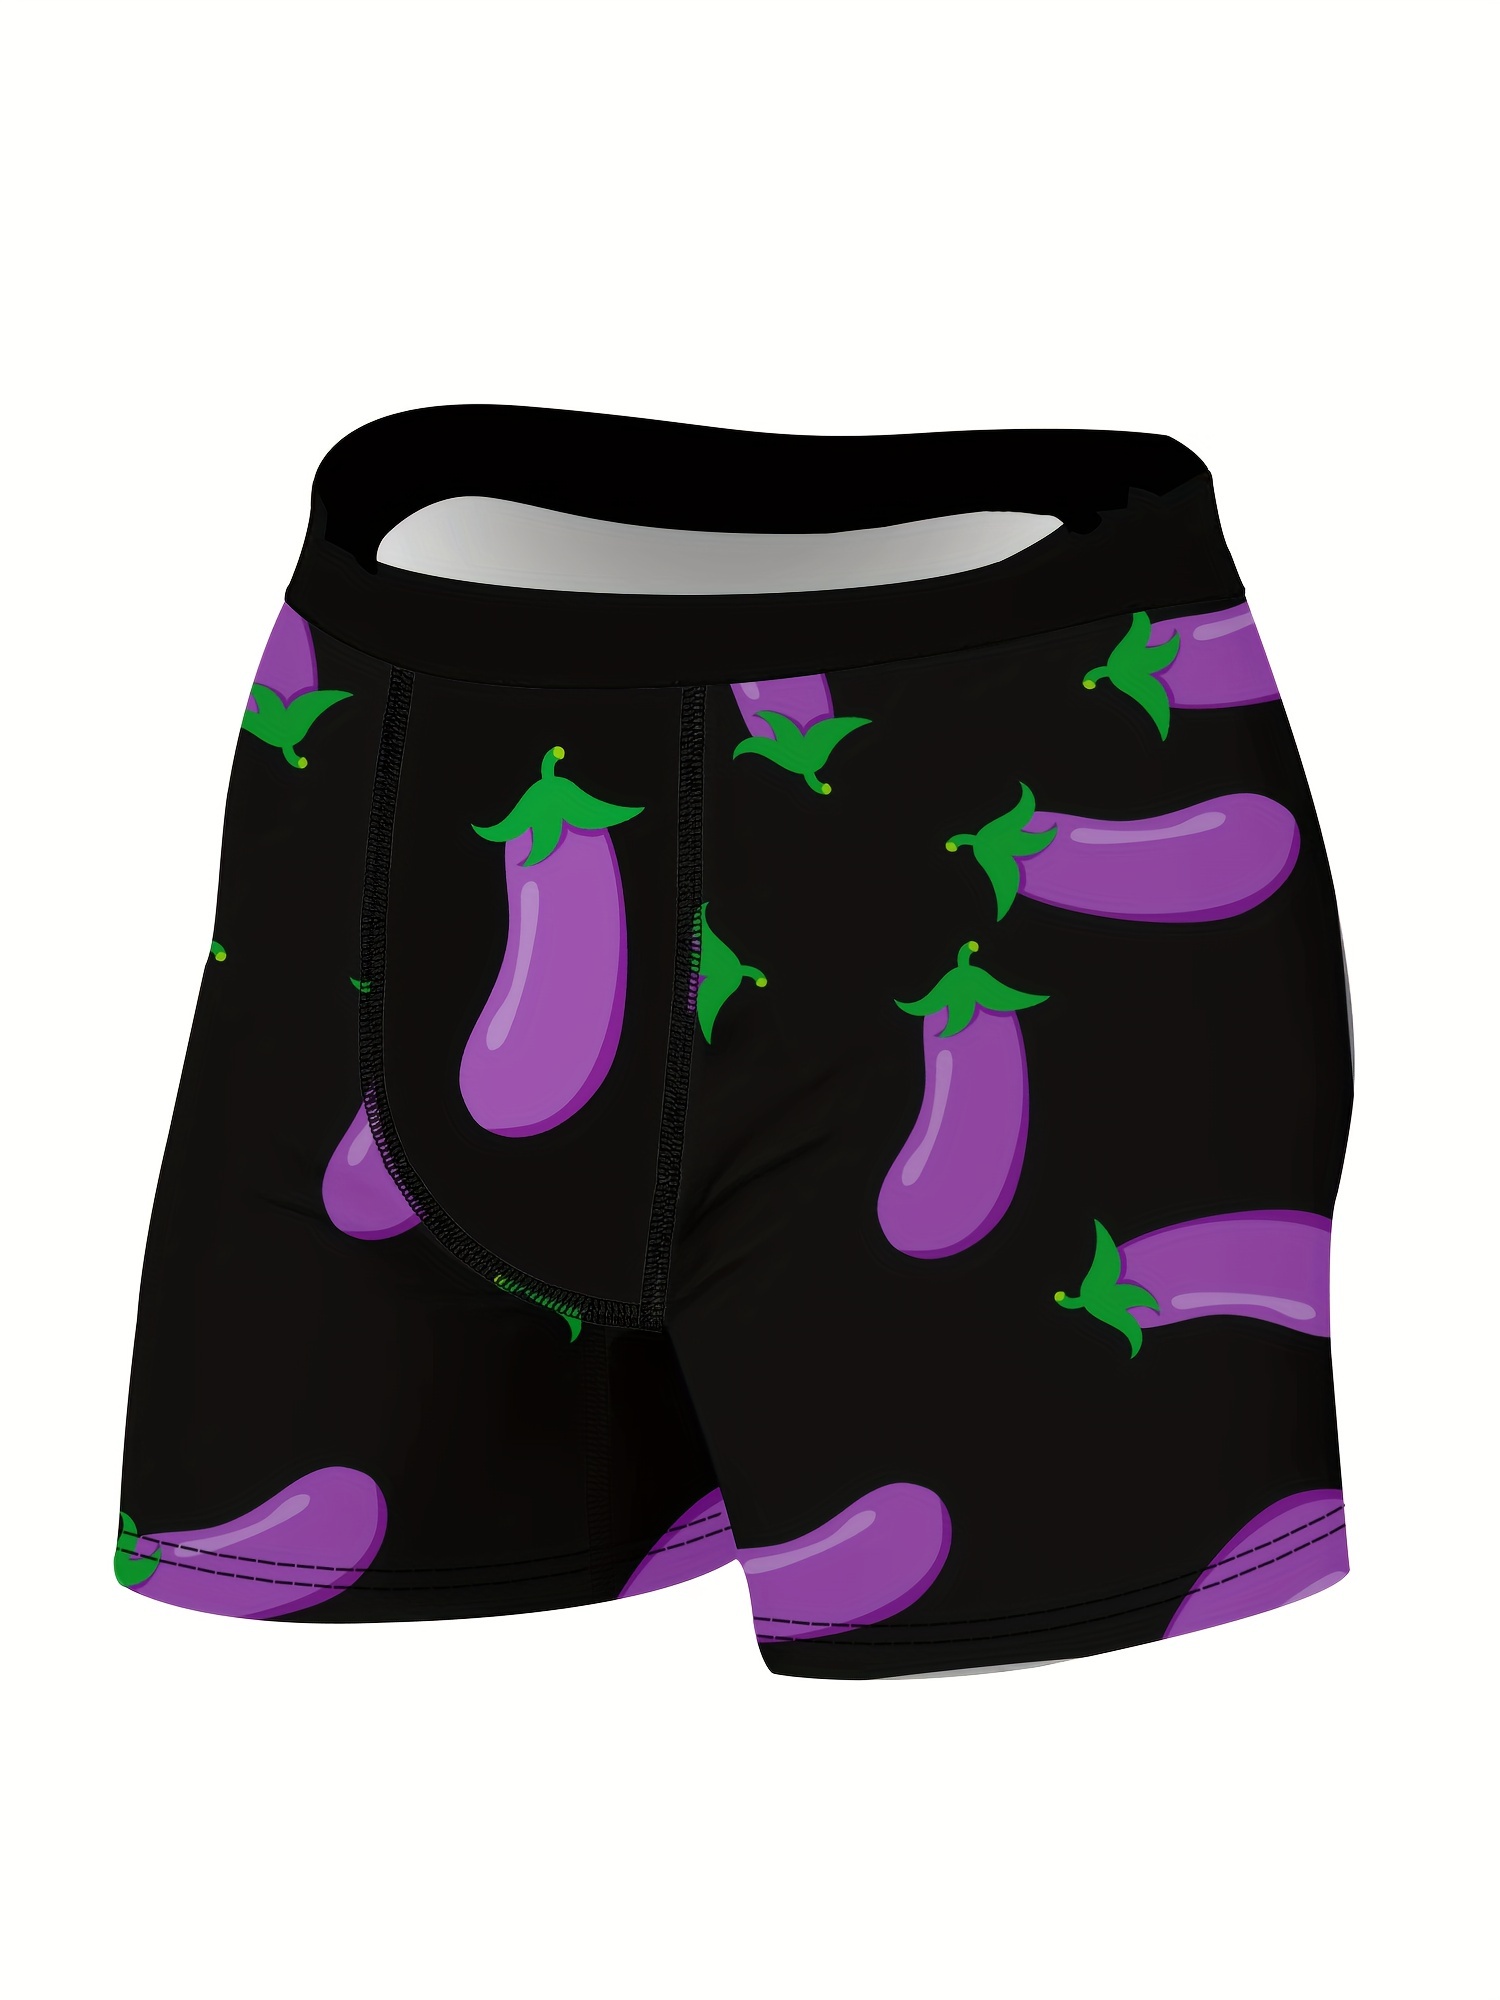 mens underwear purple eggplant print fashion novelty boxer briefs shorts breathable comfy high stretch boxer trunks details 5